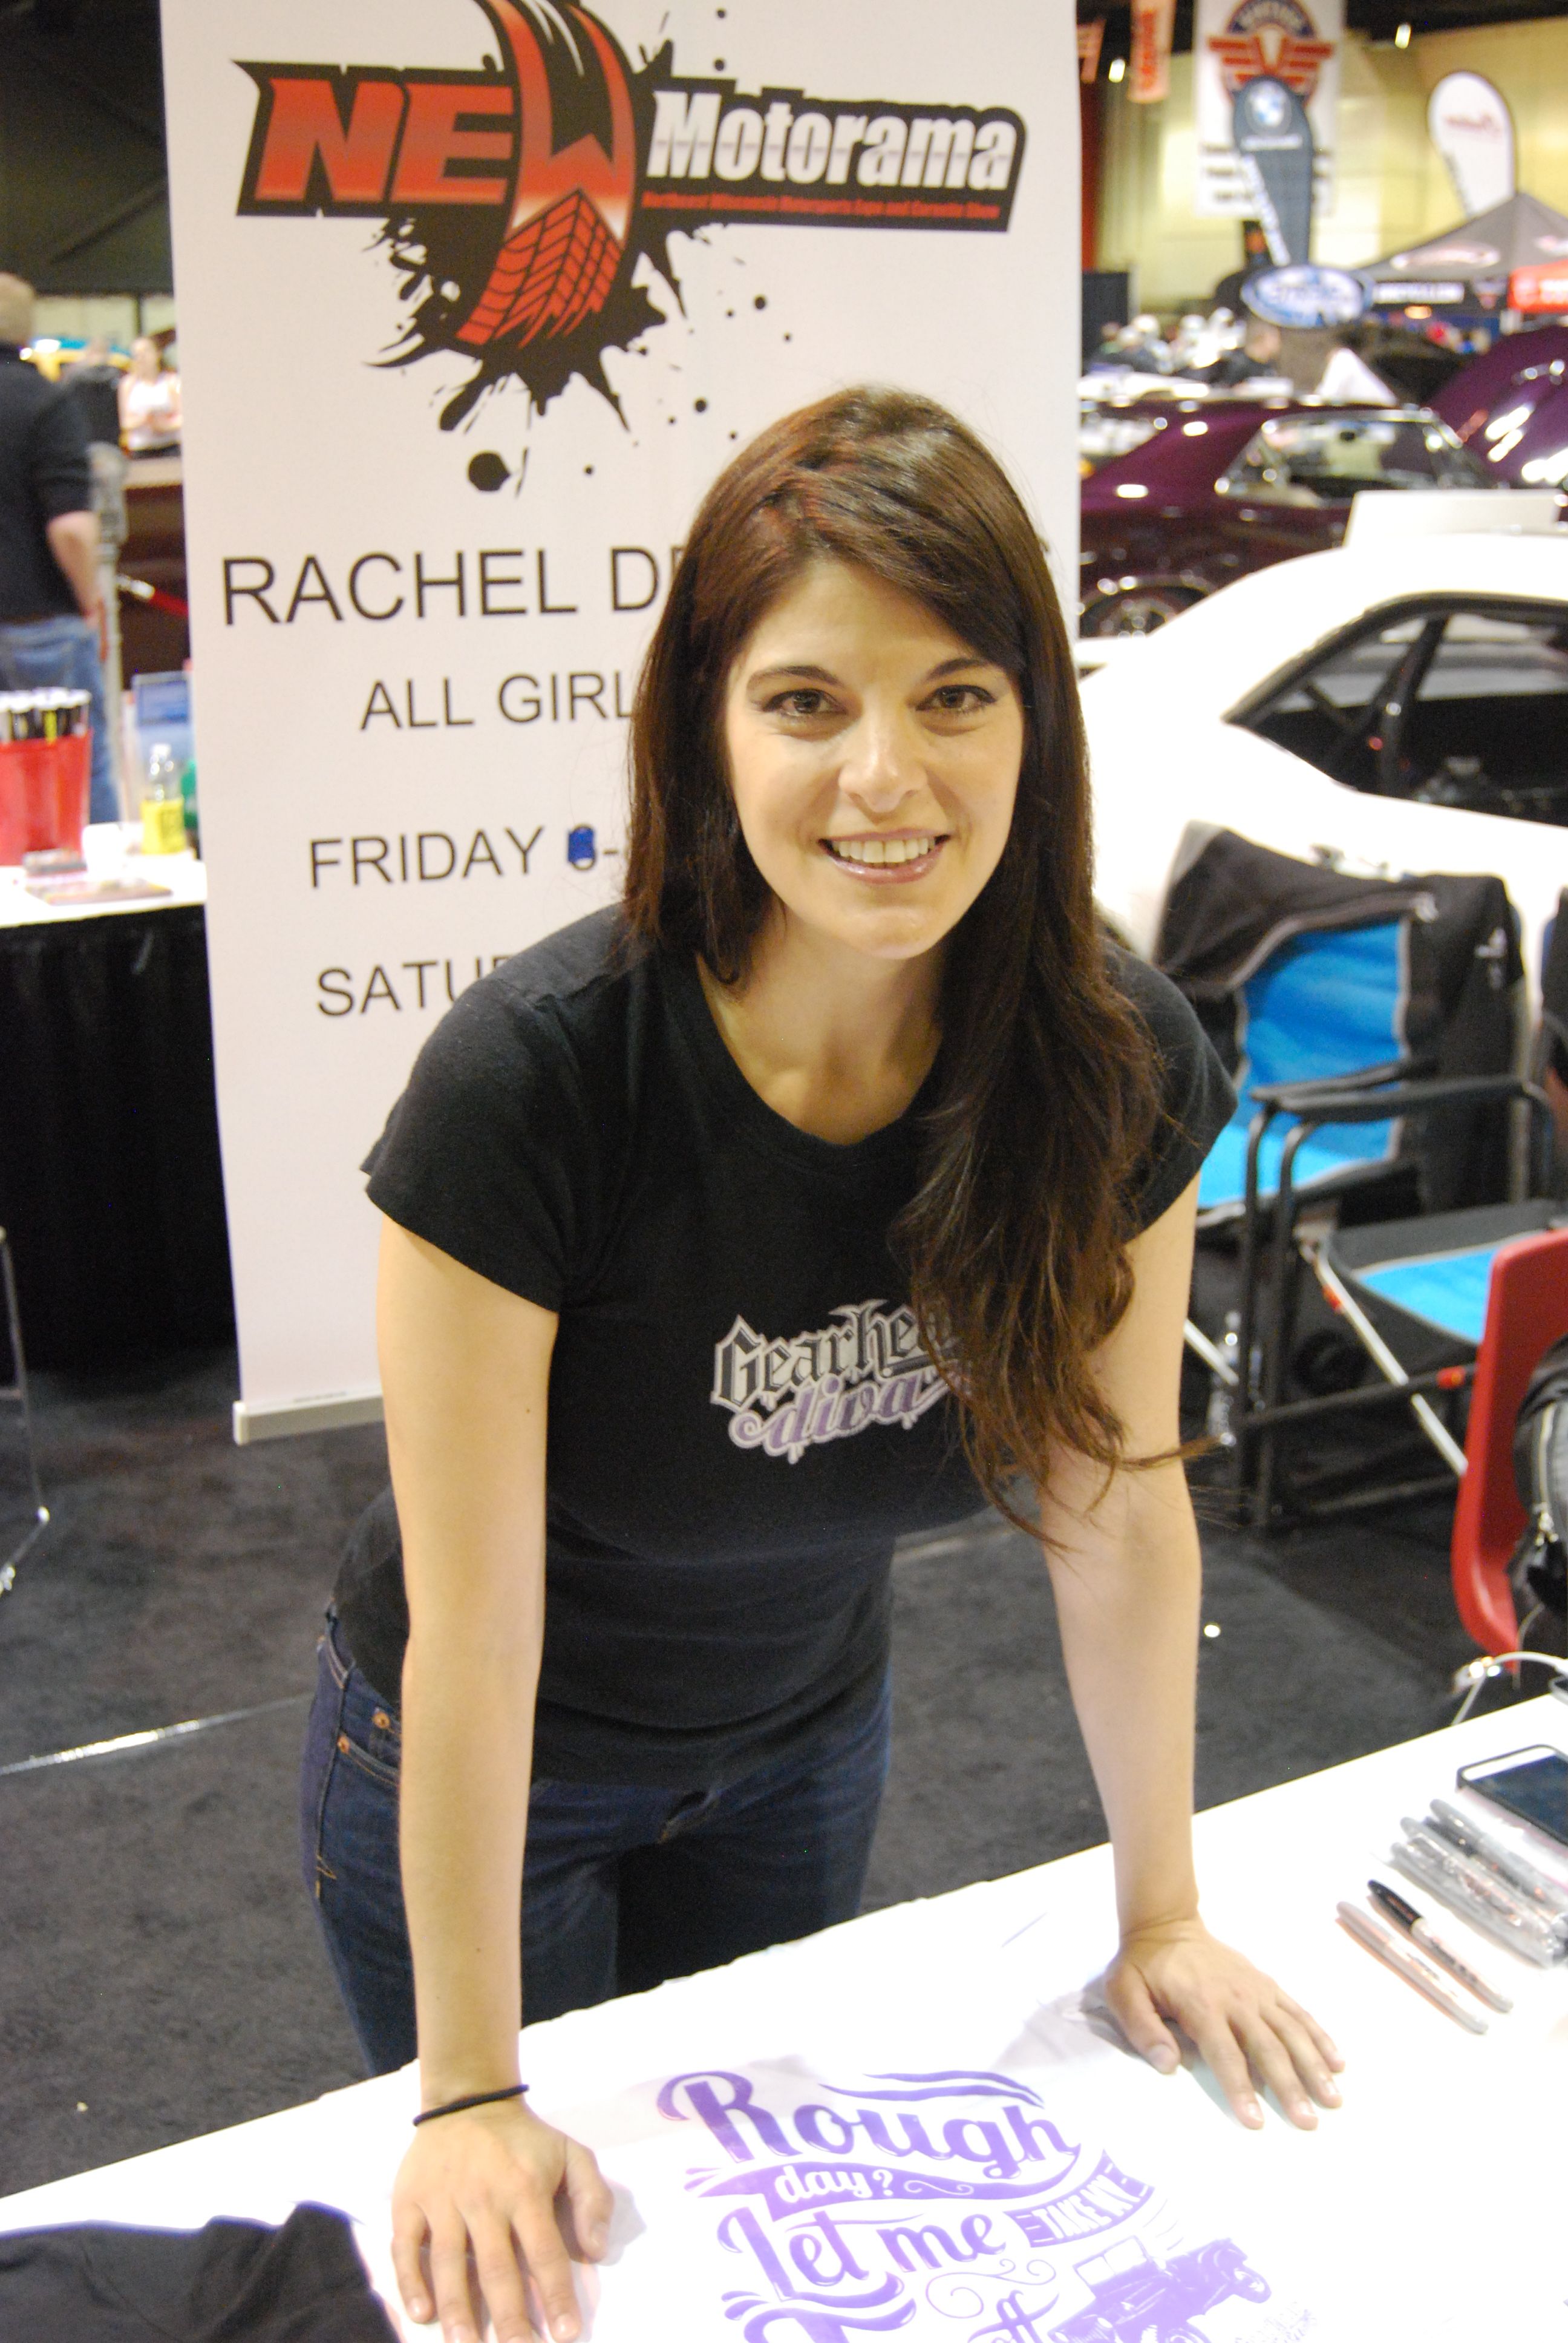 Rachel De Barros at an event booth